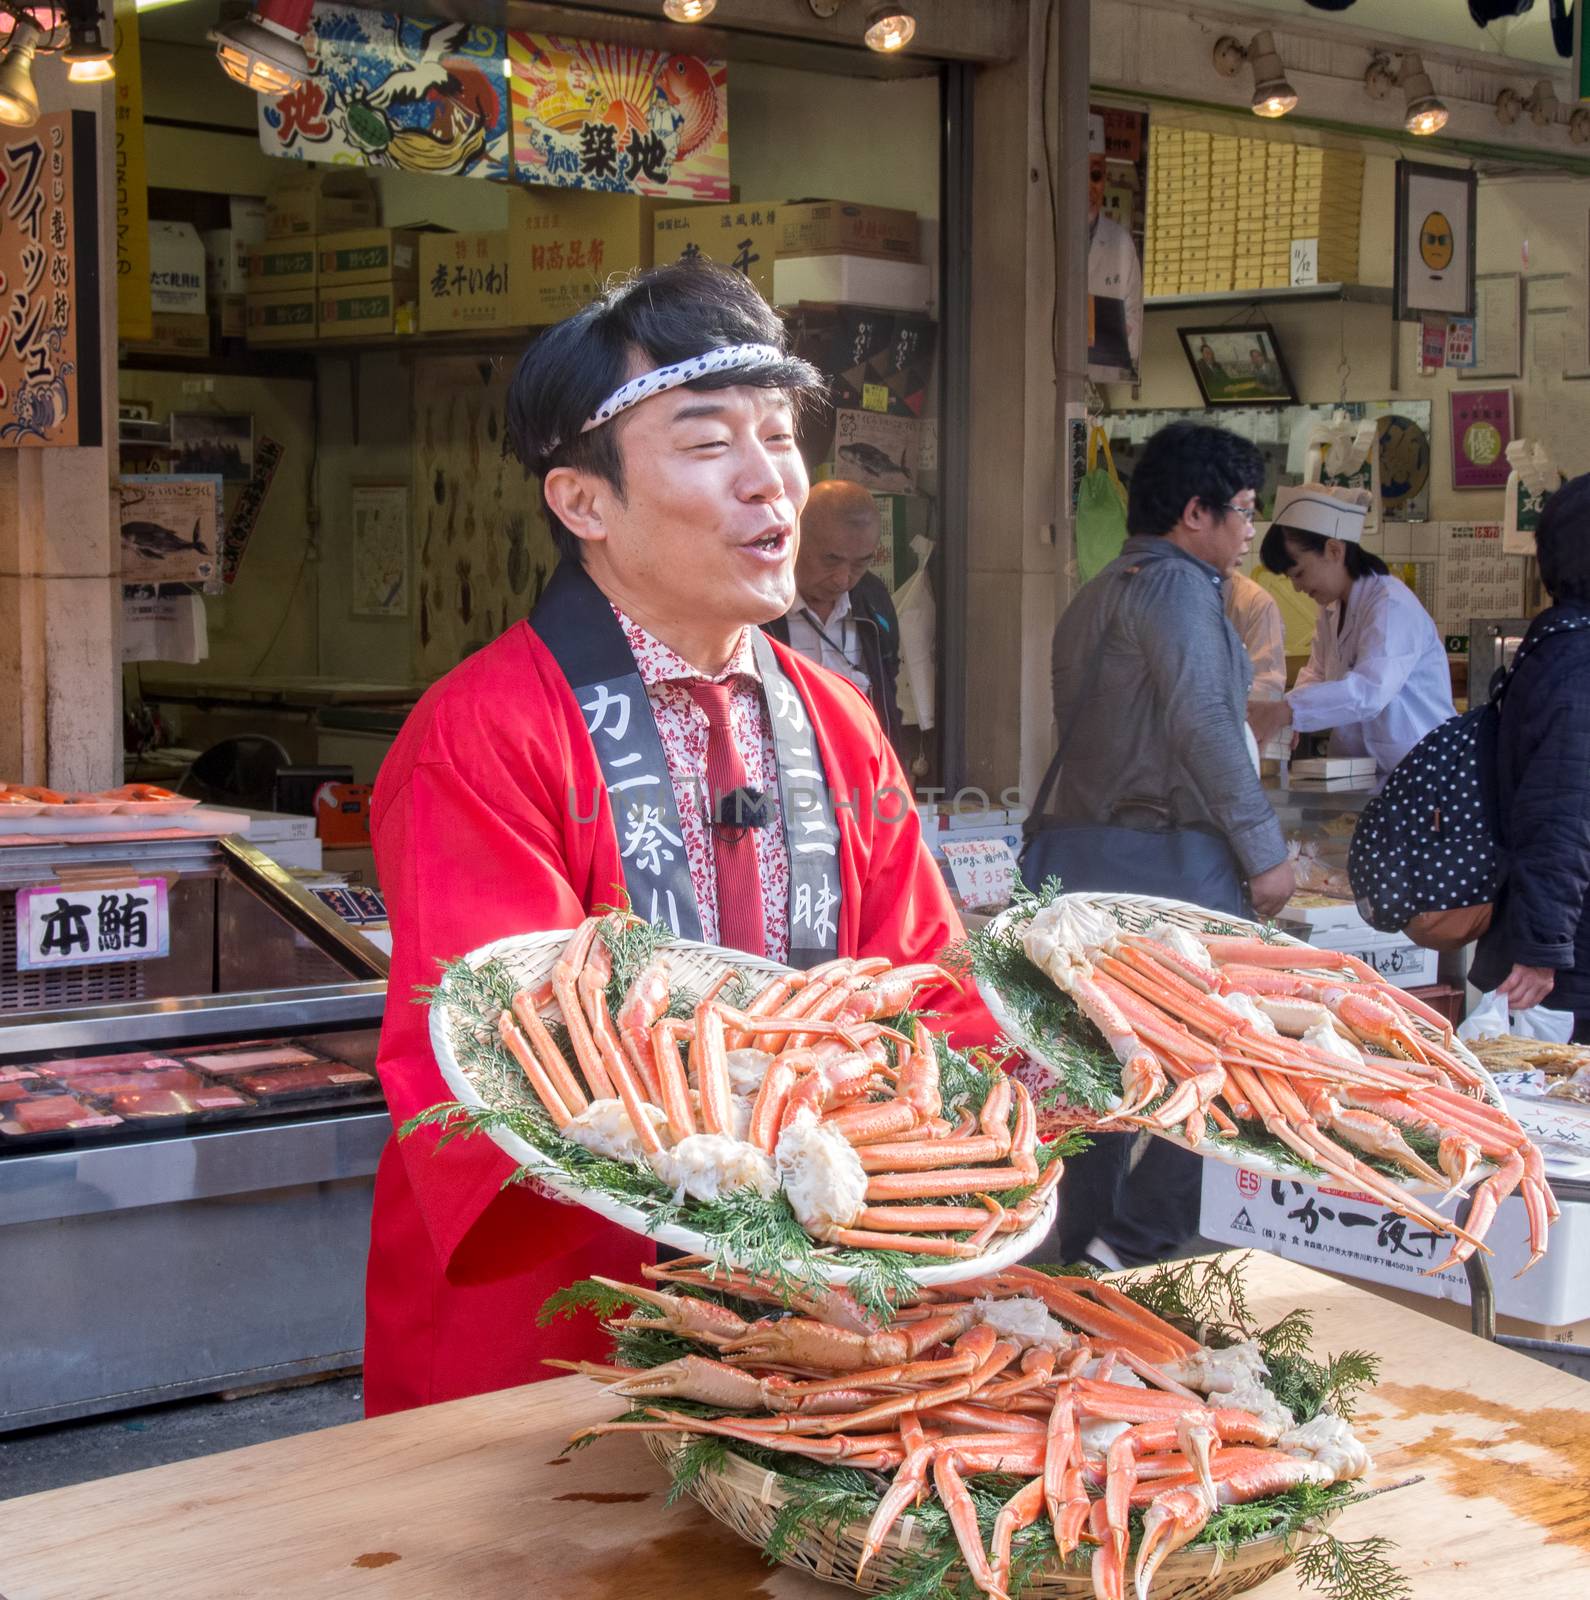 Tokyo, Japan - November 13, 2015: Tsukiji fish market. Tsukiji is the biggest freshest fish market in the world. Shop around Tsukiji peddling their giant crabs.